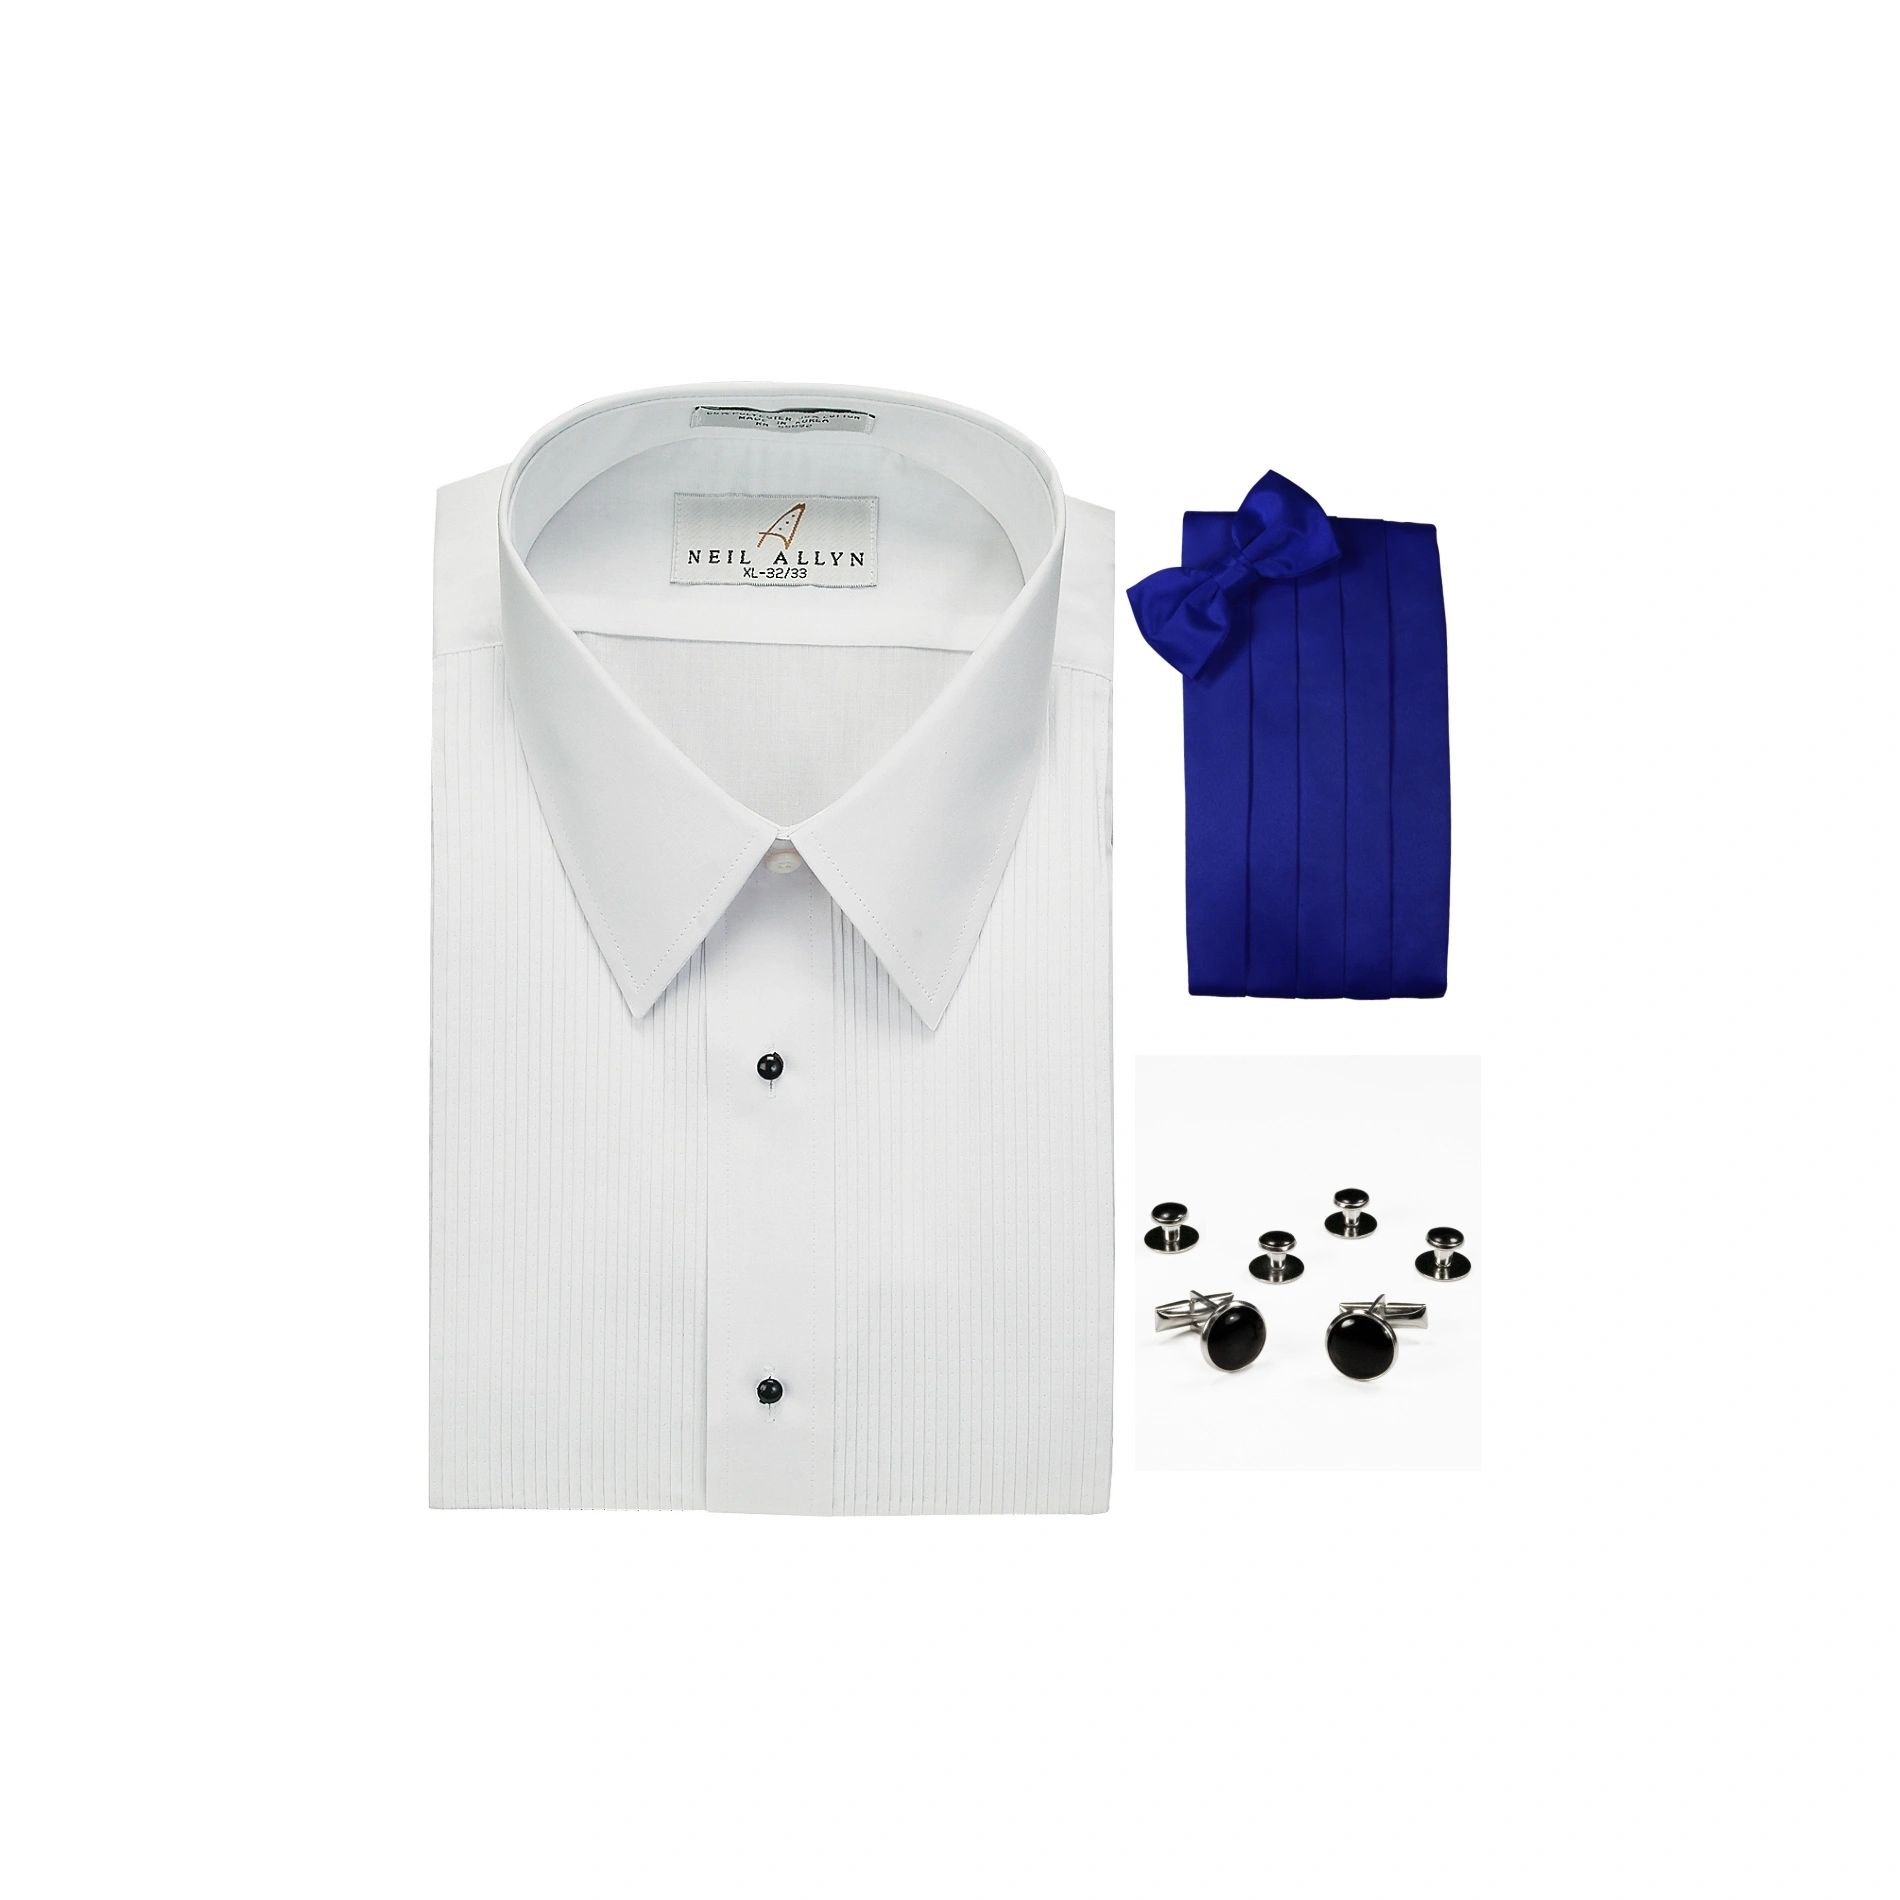 Neil Allyn Lay-Down Collar 1/8" Pleats Formal Tuxedo Shirt, Royal Blue Cummerbund, Bow-Tie, Cuff Links & Studs